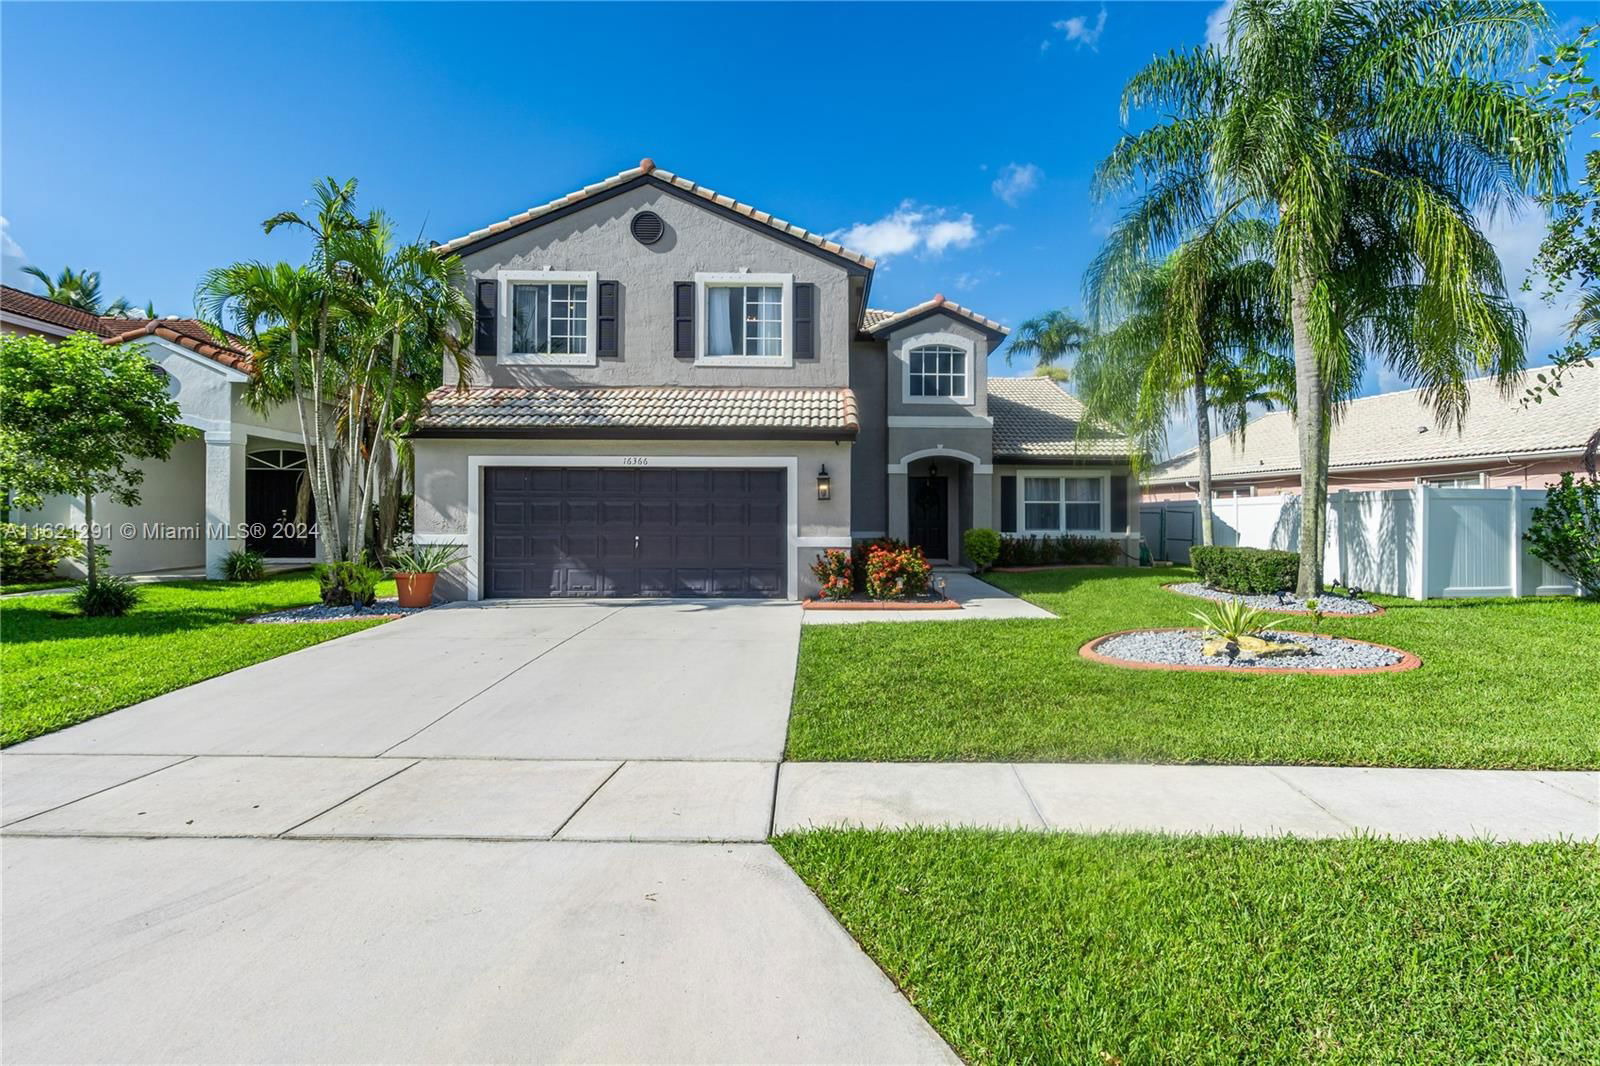 Real estate property located at 16366 2nd Drive, Broward County, HEFTLER HOMES AT PEMBROKE, Pembroke Pines, FL